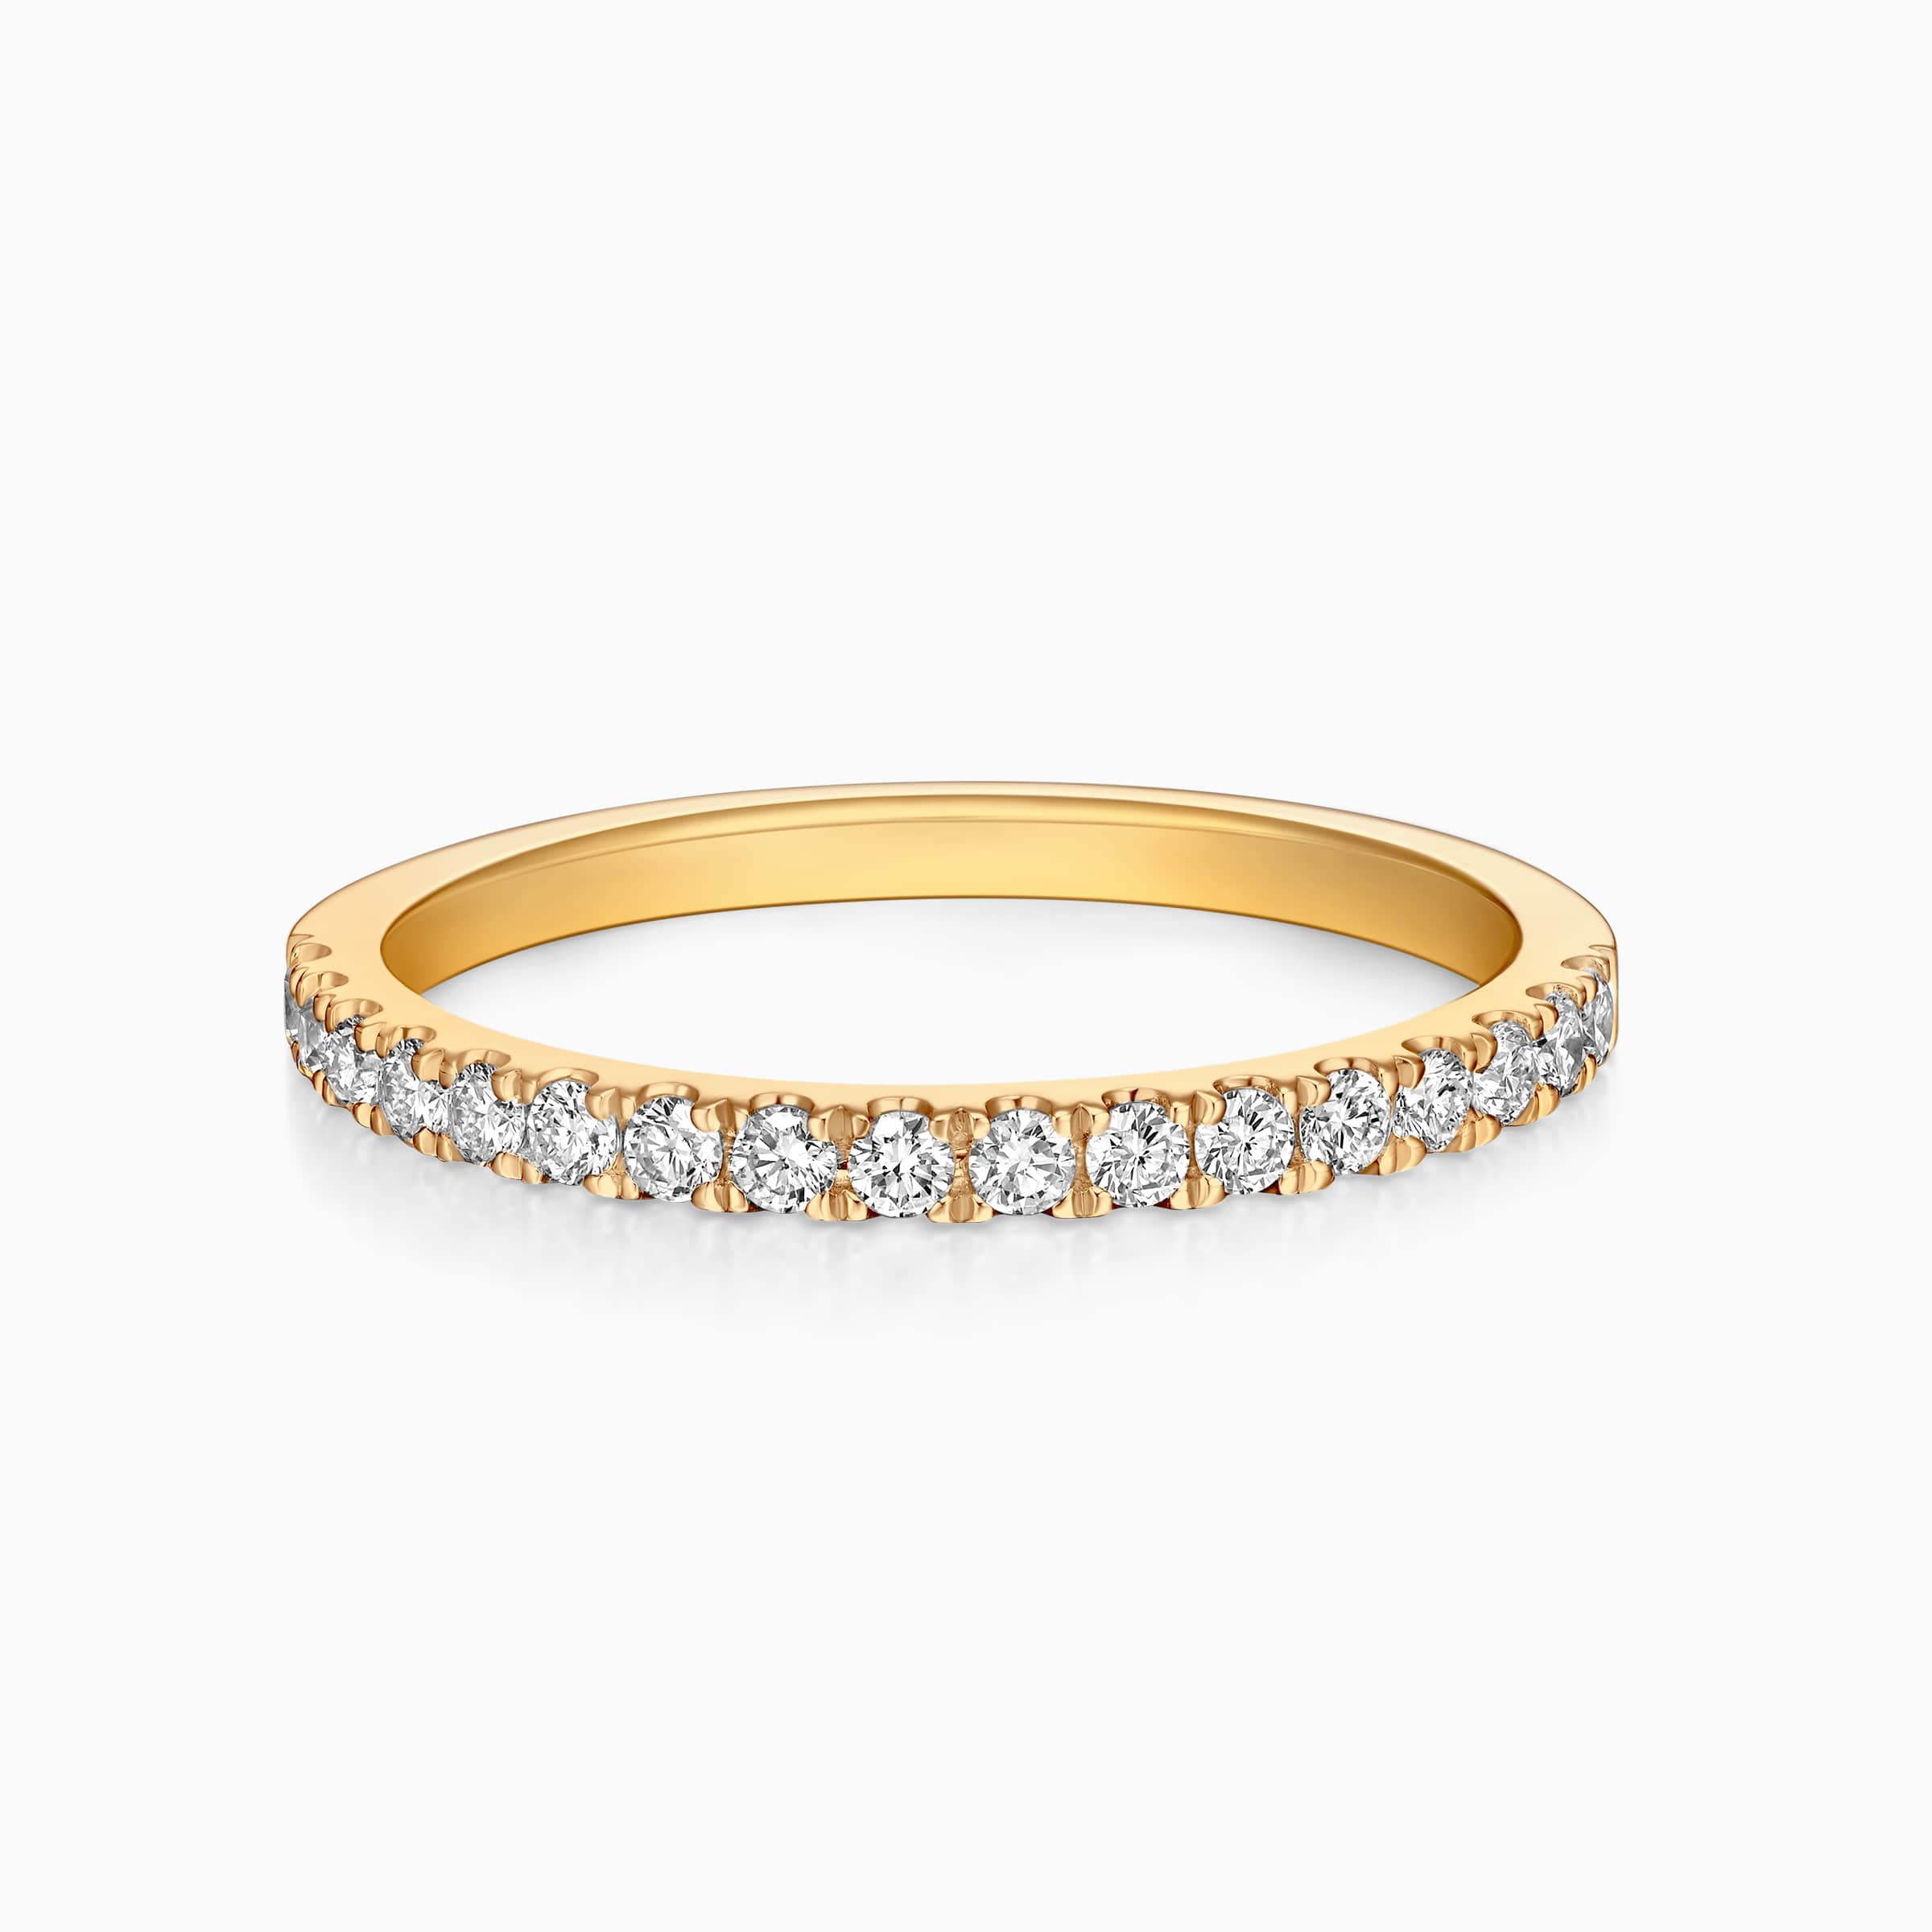 Darry Ring gold eternity ring for women